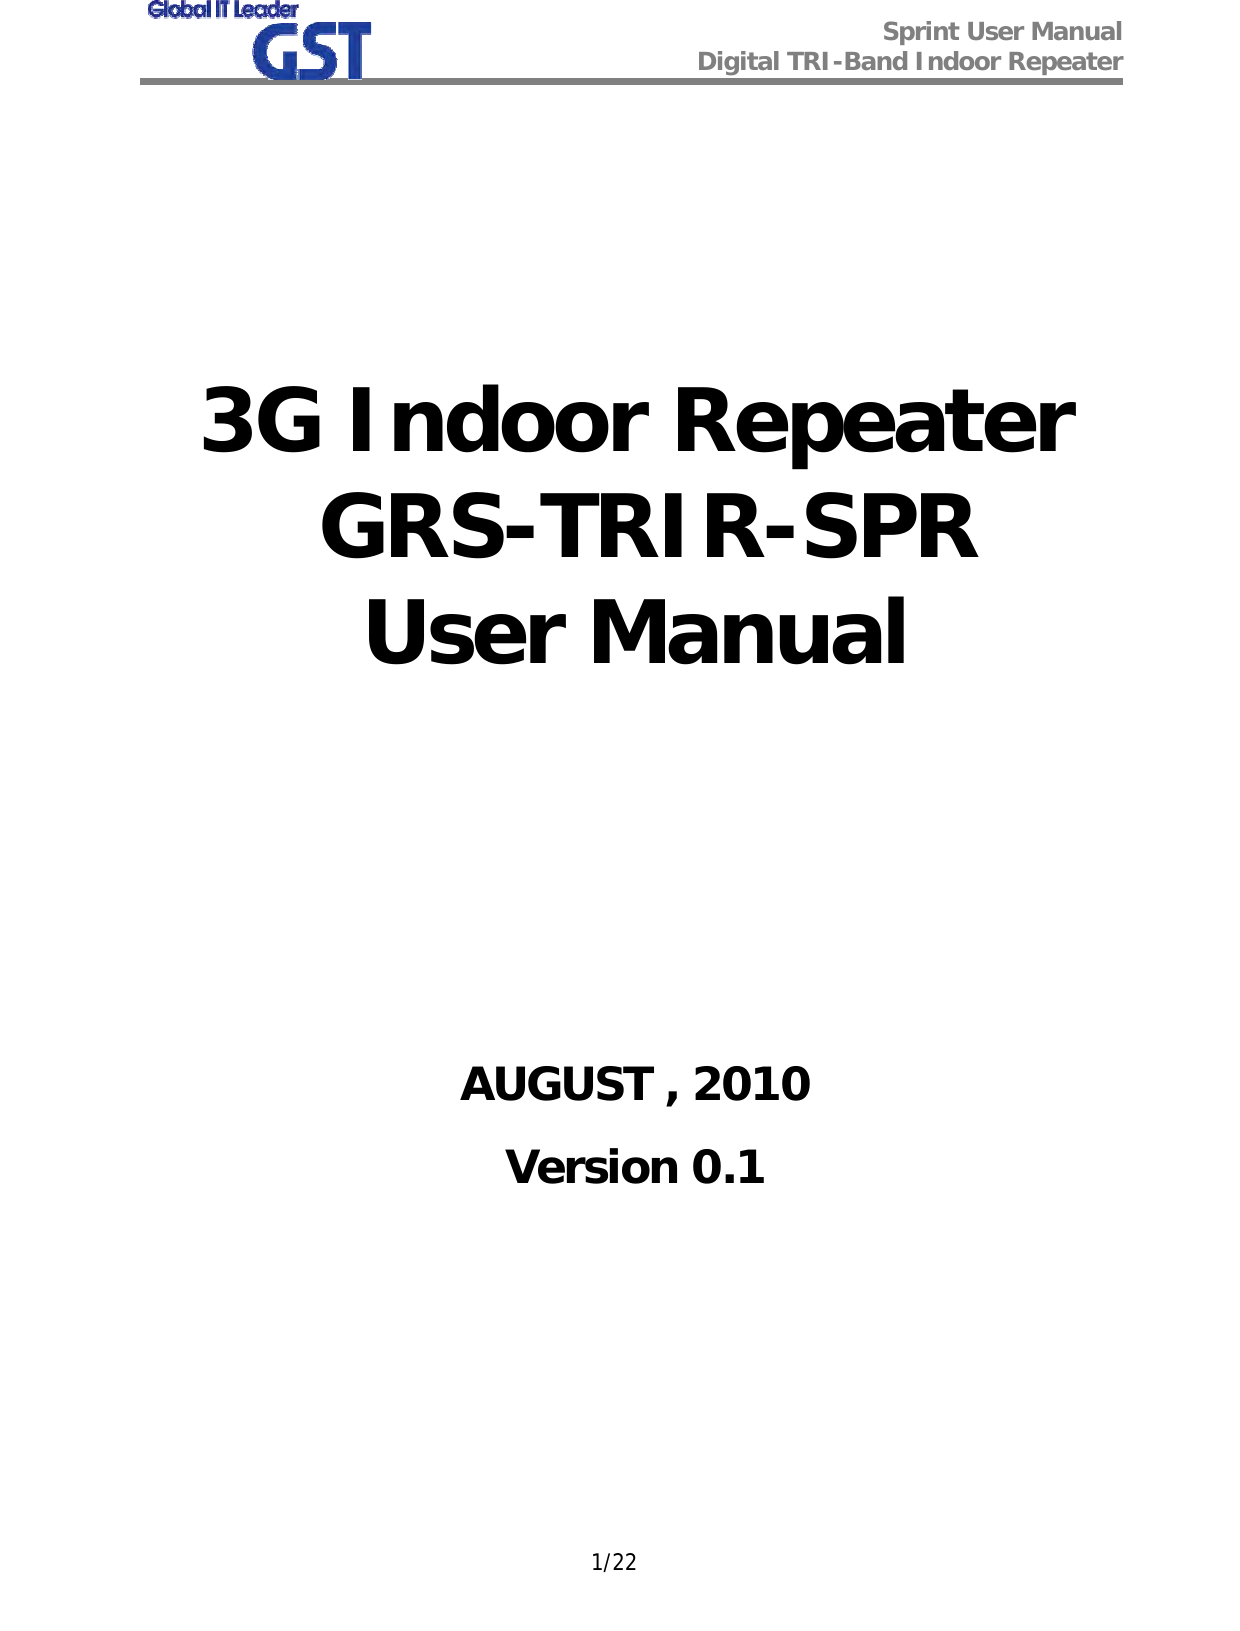  Sprint User Manual Digital TRI-Band Indoor Repeater   1/22       3G Indoor Repeater  GRS-TRIR-SPR User Manual          AUGUST , 2010 Version 0.1        